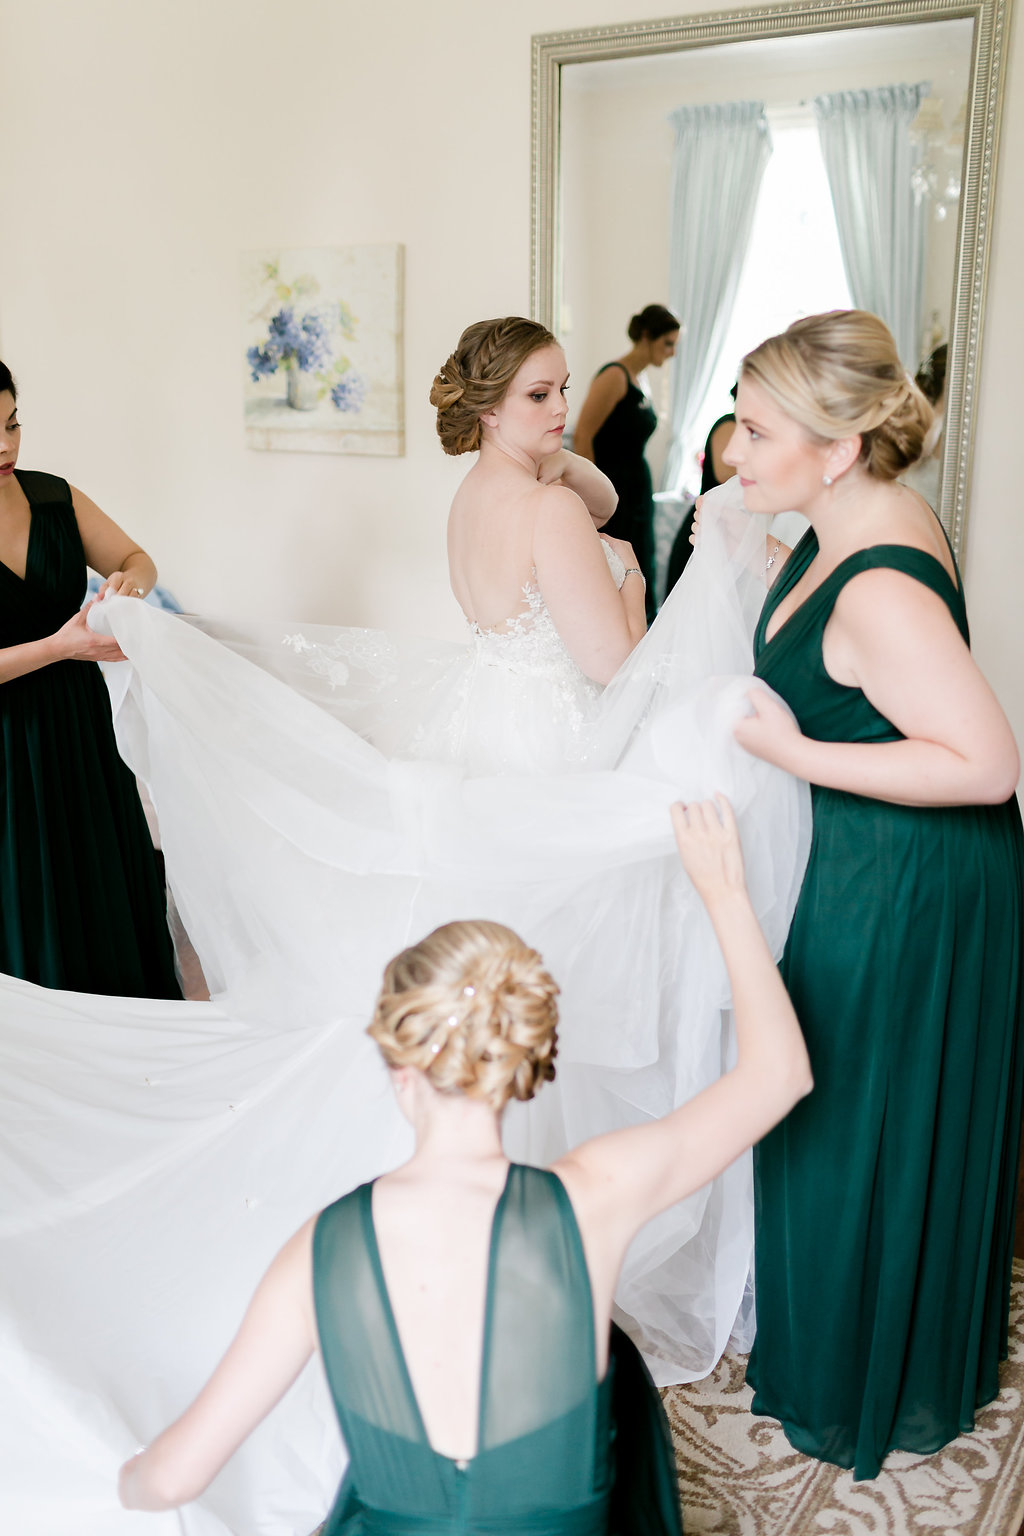 A Classic Rust Manor House Virginia Wedding - The Overwhelmed Bride Wedding Blog